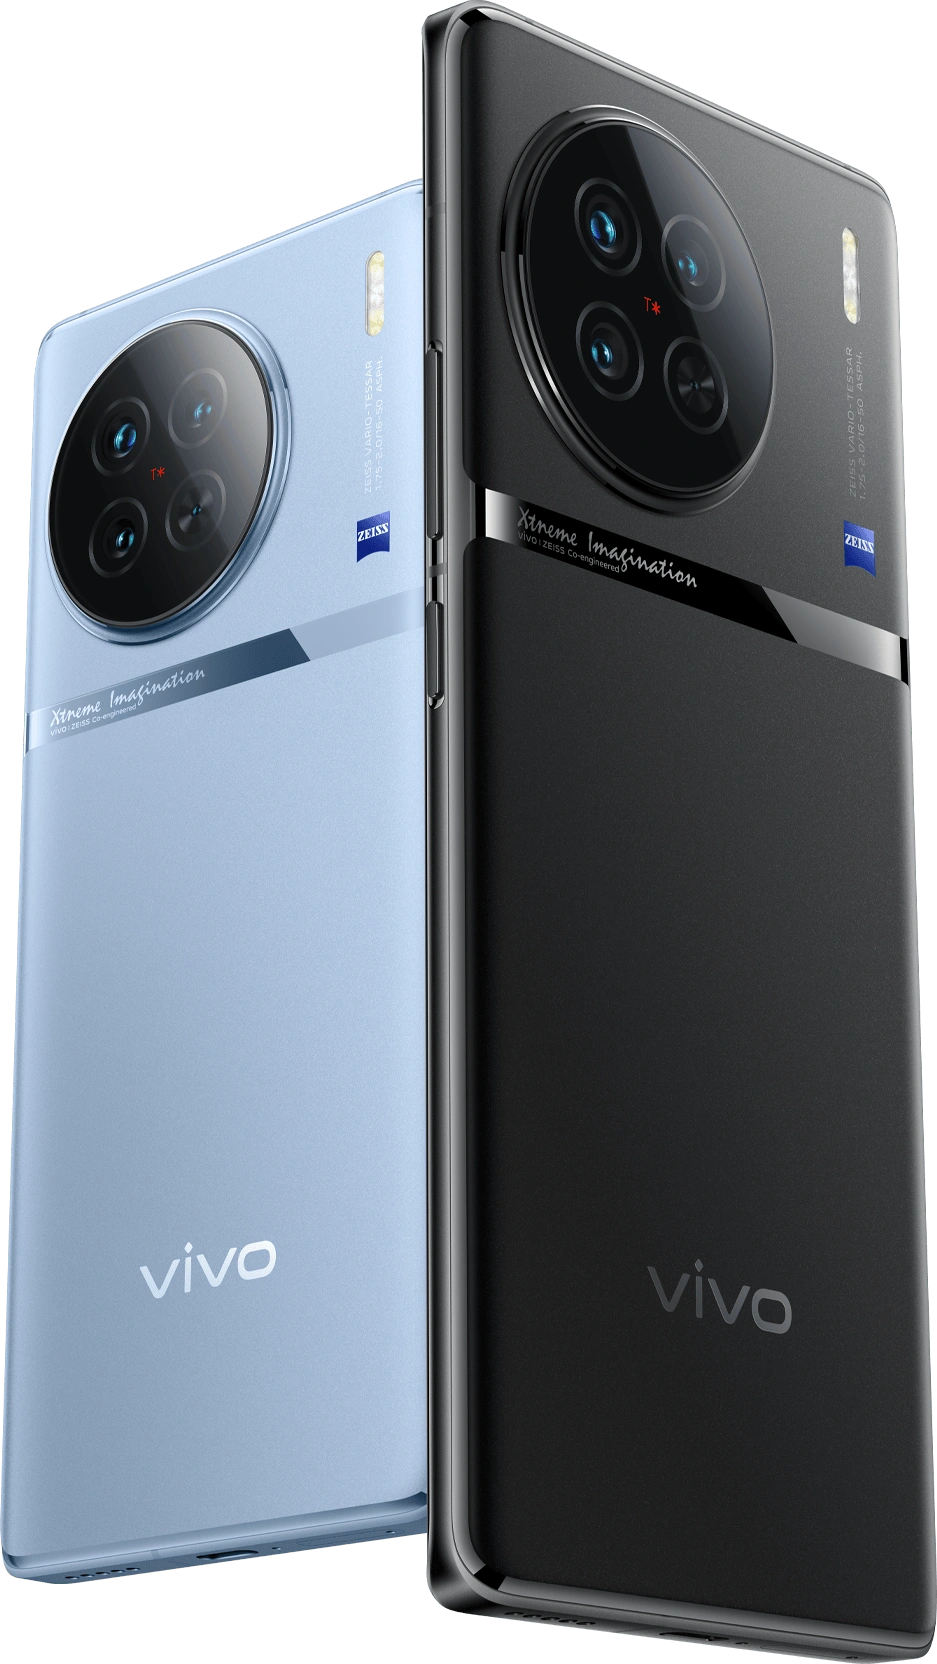 Vivo X90 Pro CAMERA TEST by a Photographer